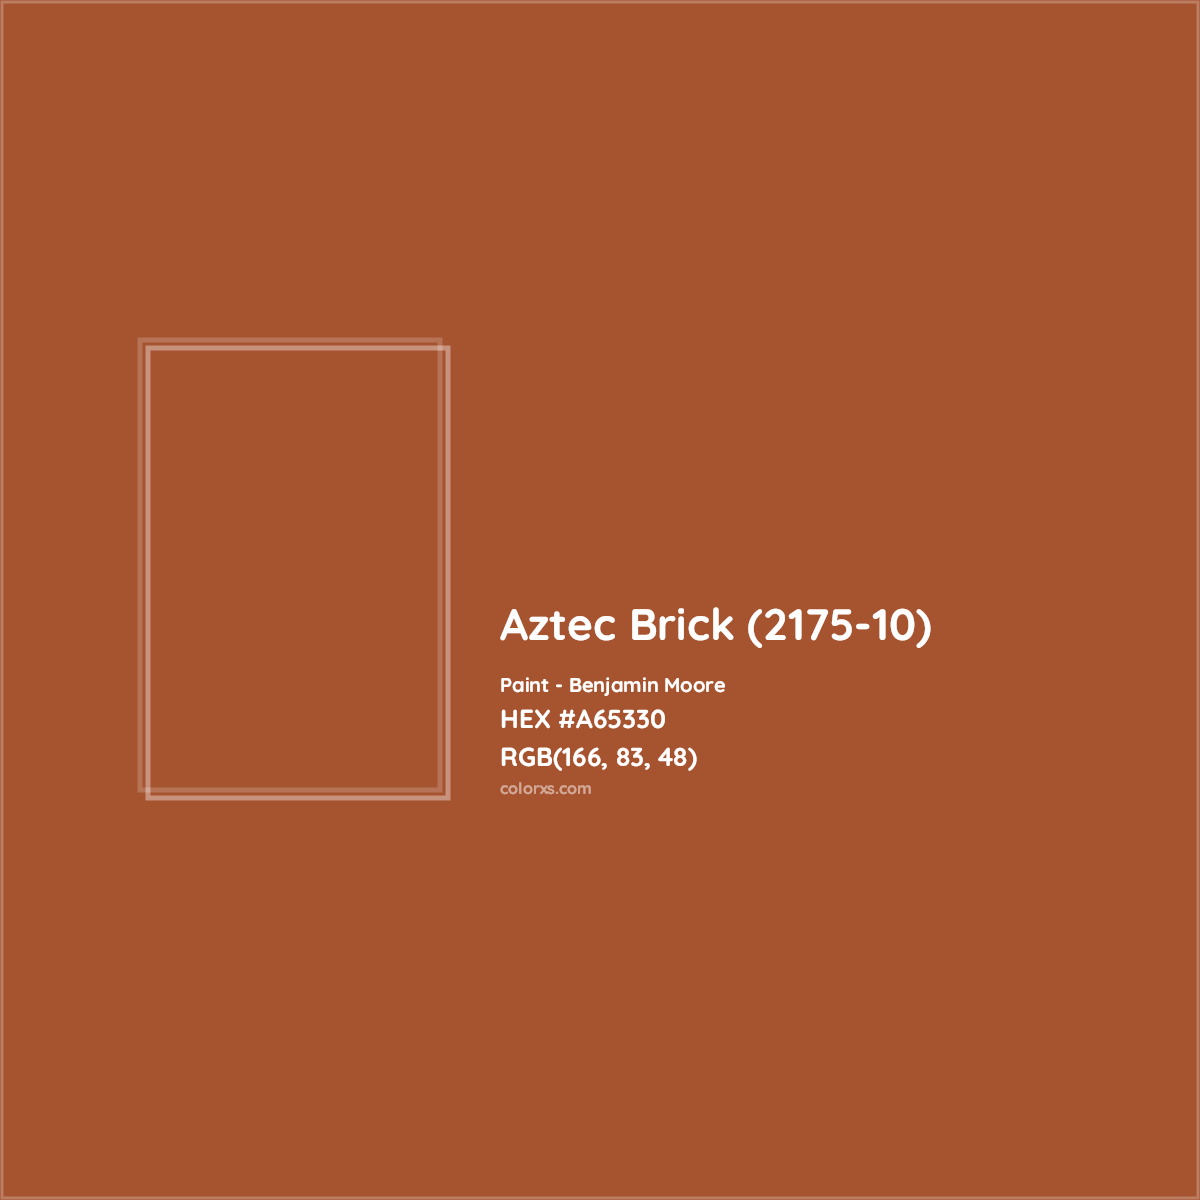 Benjamin Moore Aztec Brick (2175-10) Paint color codes, similar paints and  colors 